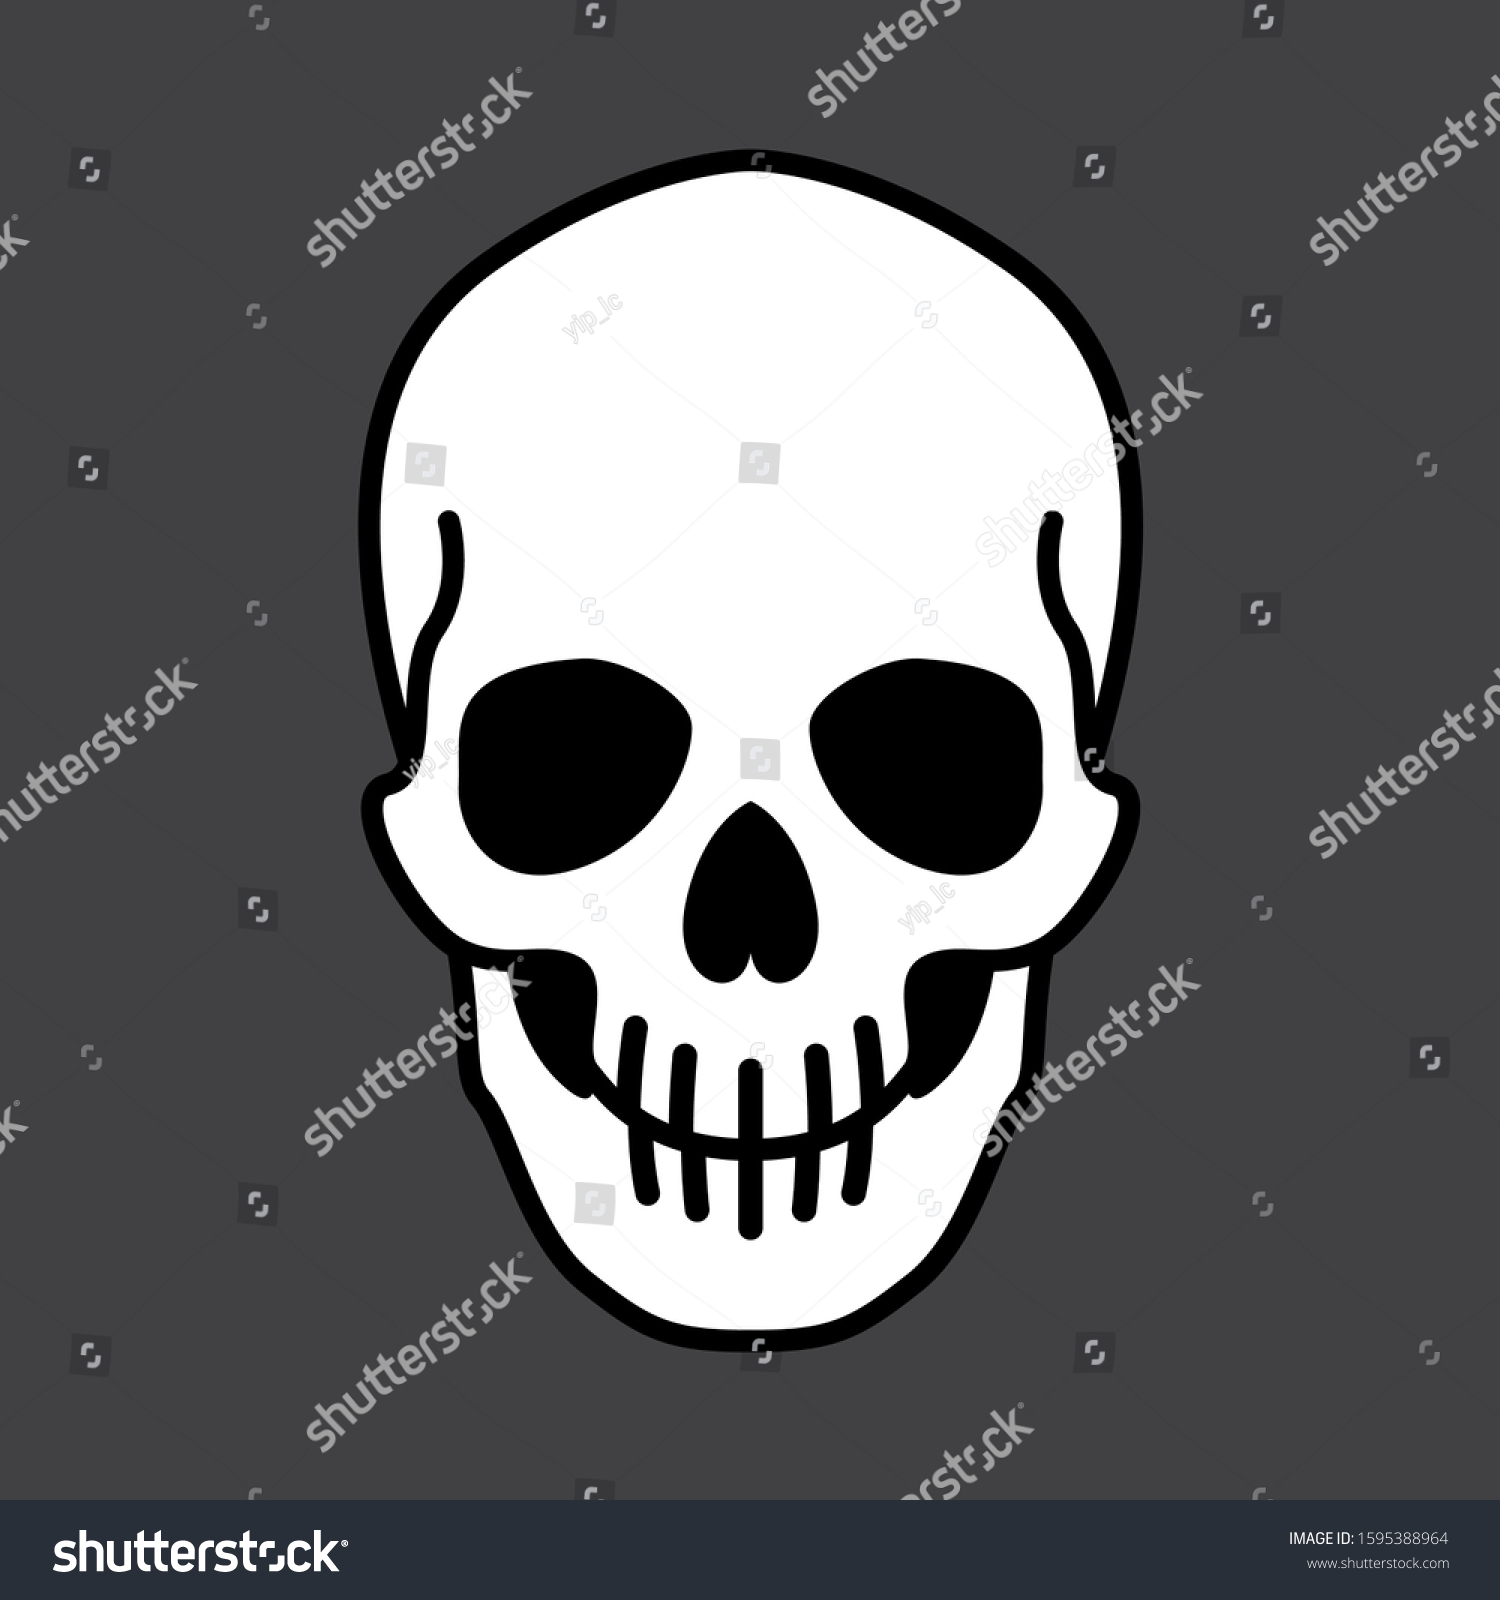 32,731 Simple skull Images, Stock Photos & Vectors | Shutterstock